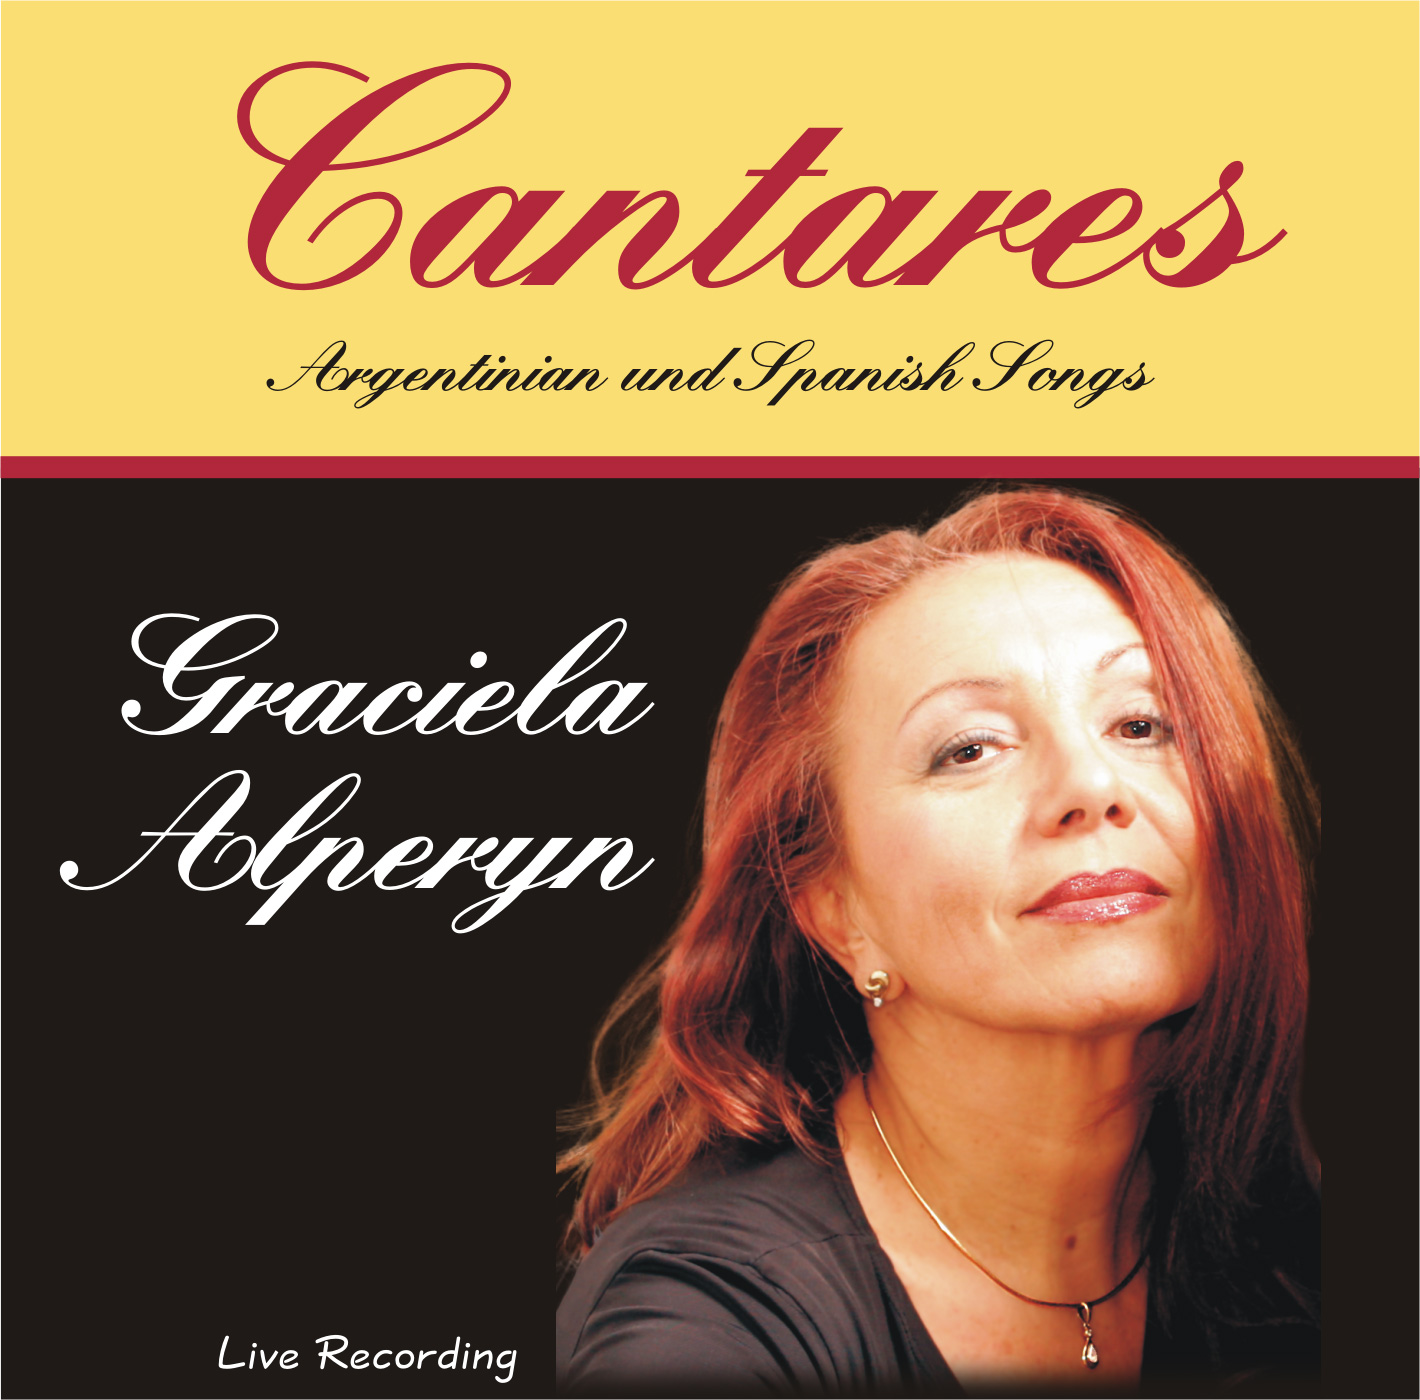 Cantares - Graciela Alperyn